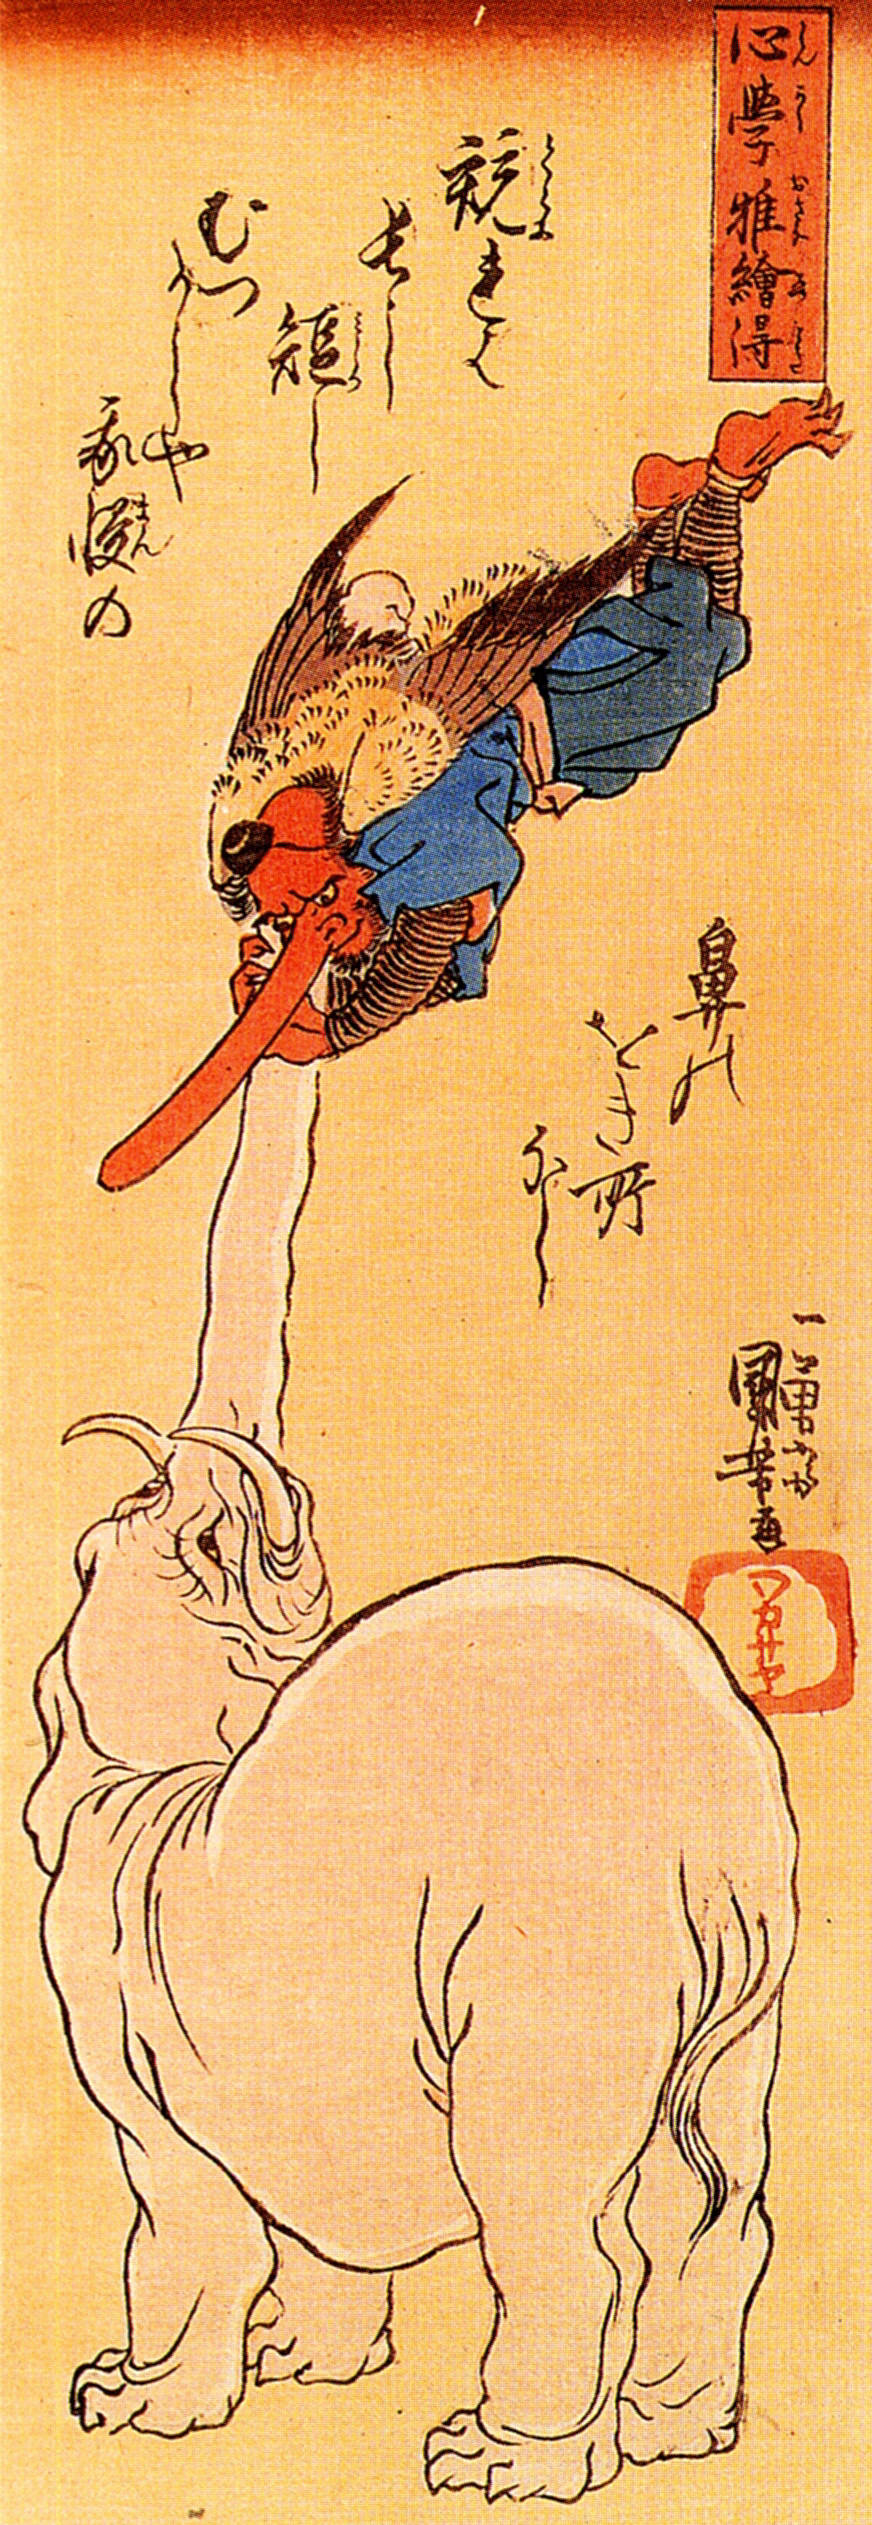 A flying tengu goblin wrestling with a mythical Japanese elephant.